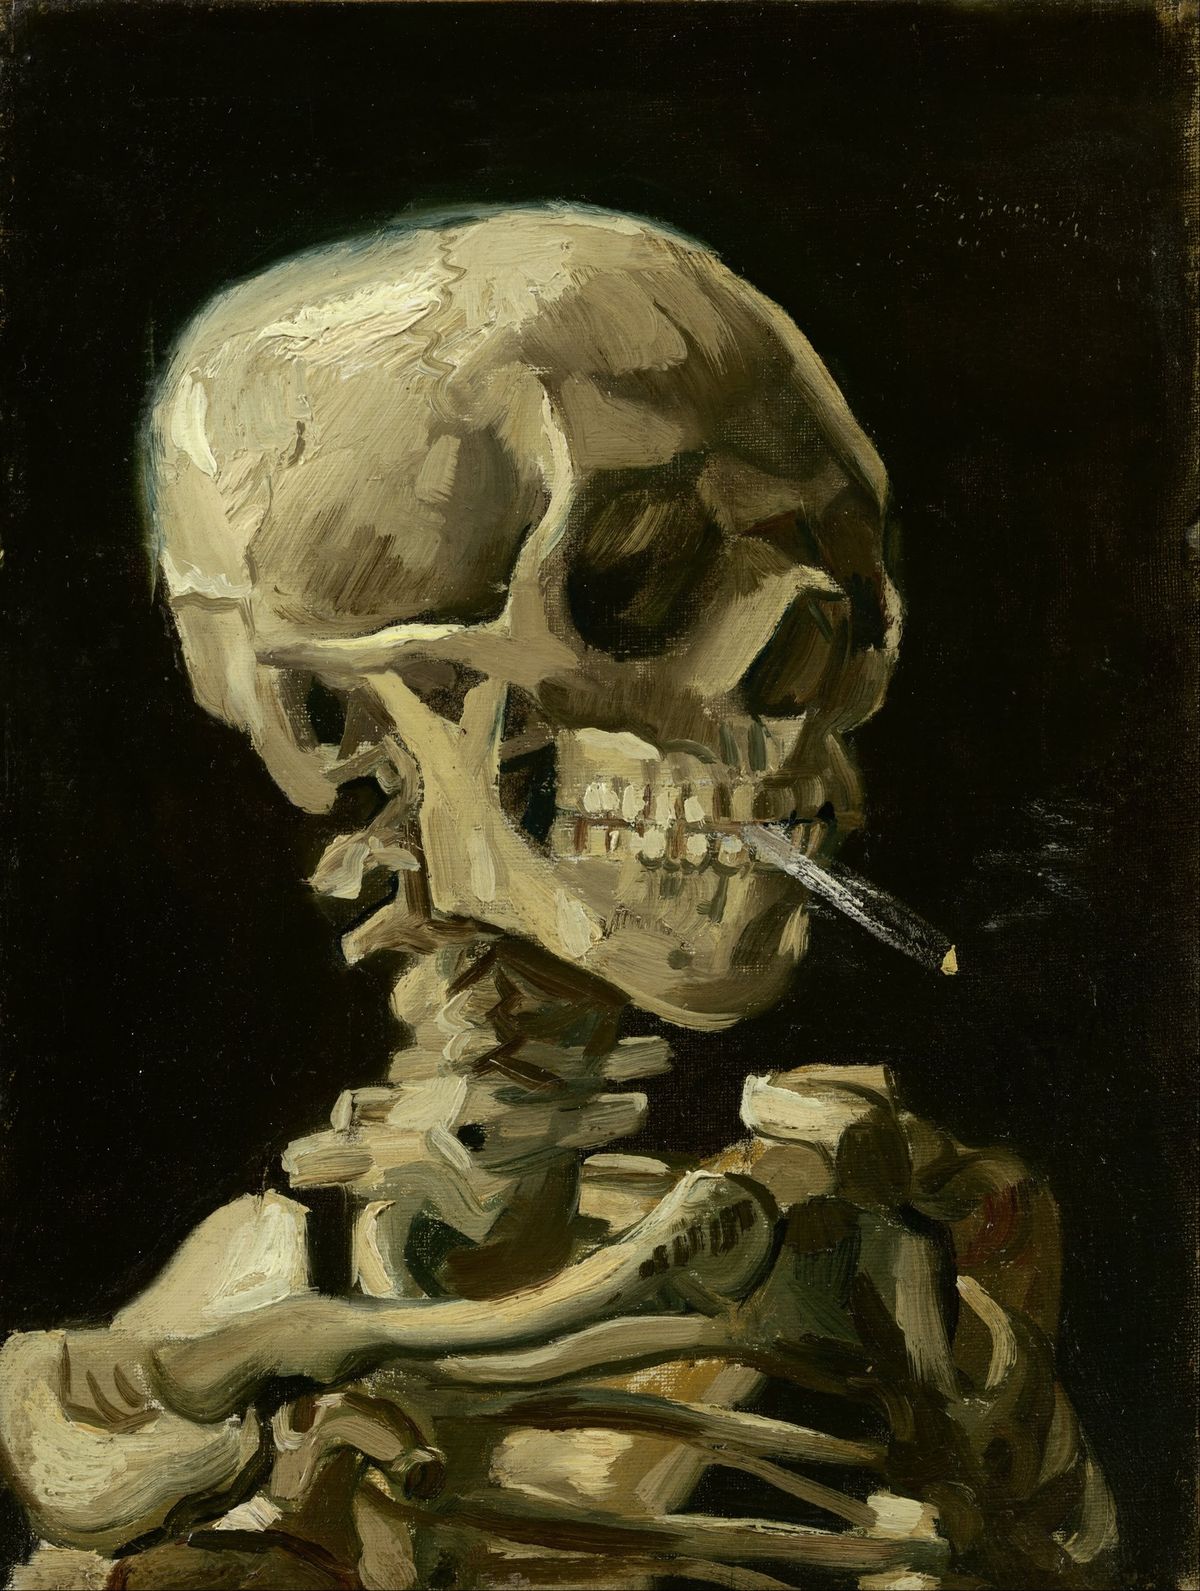 Friday 3rd May - Van Gogh's "Skeleton"